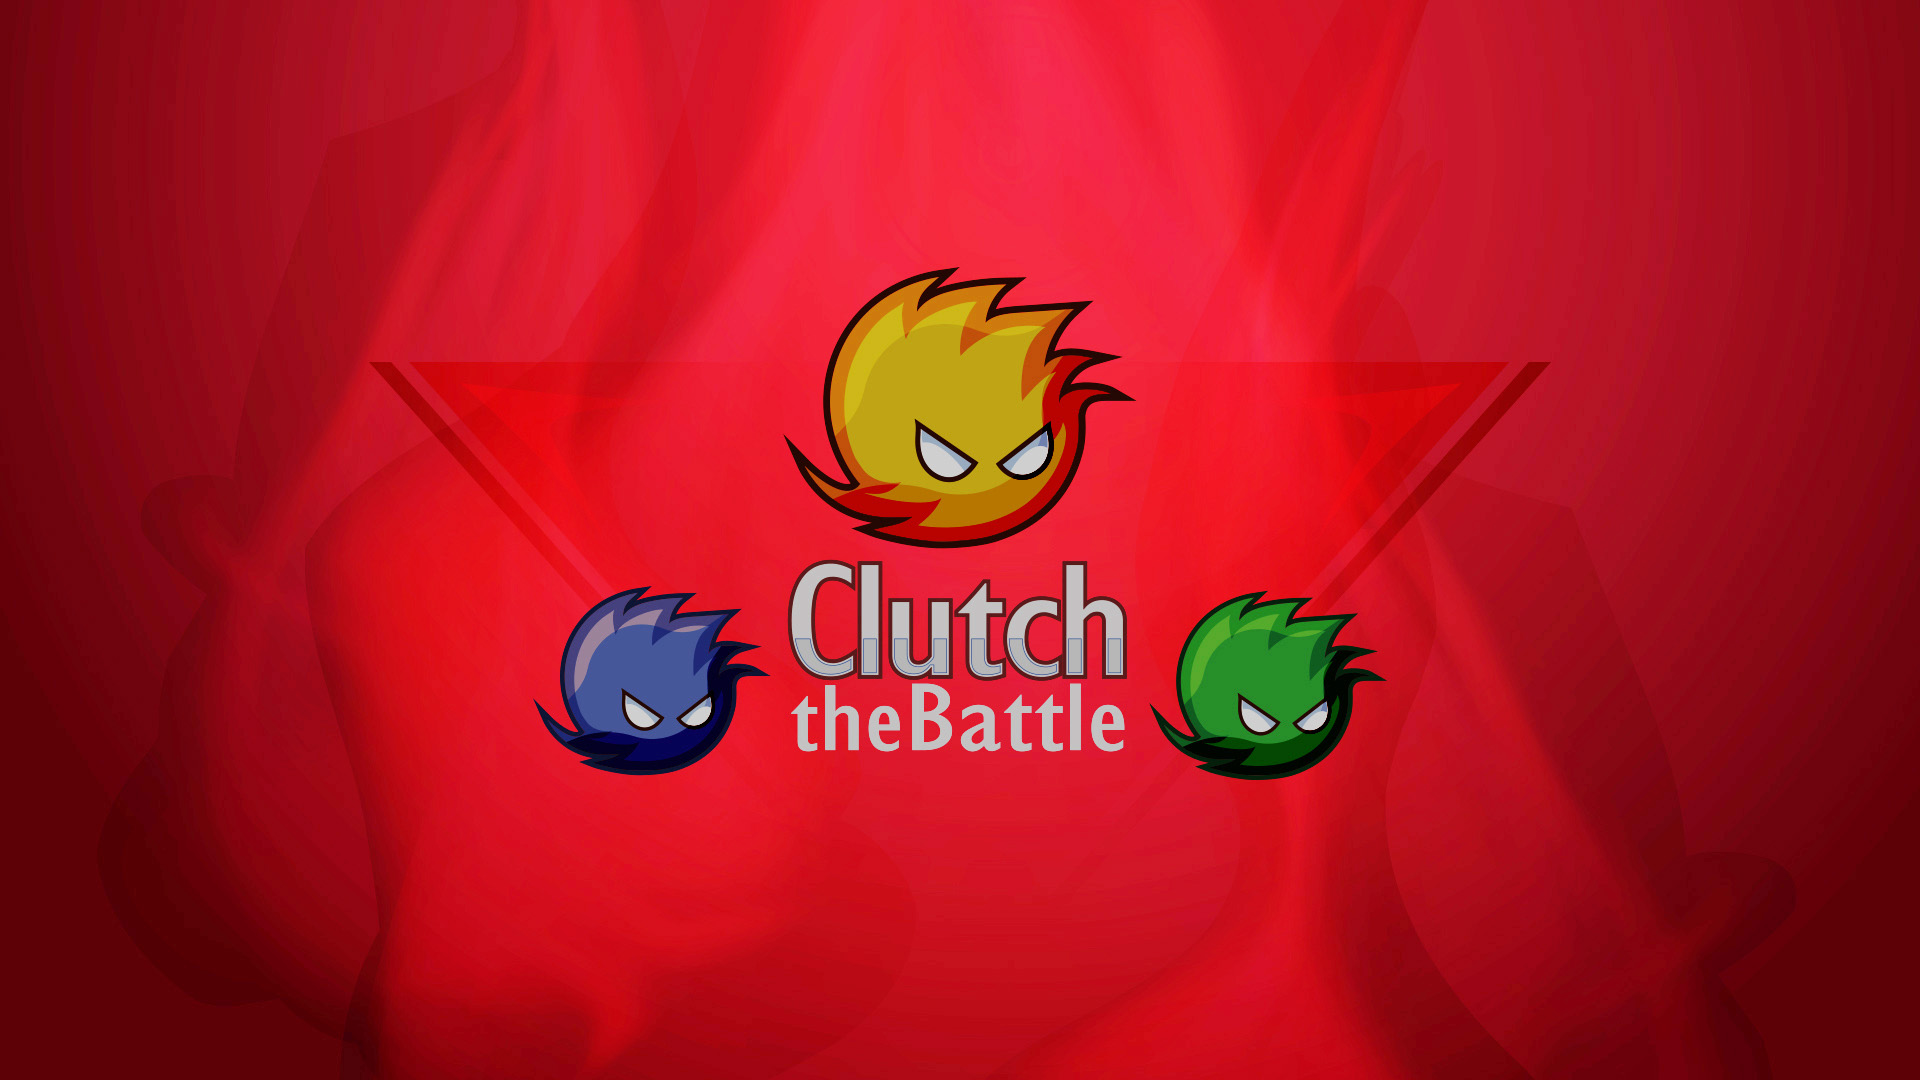 【VALORANT】賞金付きコミュニティ大会「Clutch the Battle」が平日20時より毎日開催中。実況解説・オブザーバーにチャレンジしたいスタッフも募集中￼